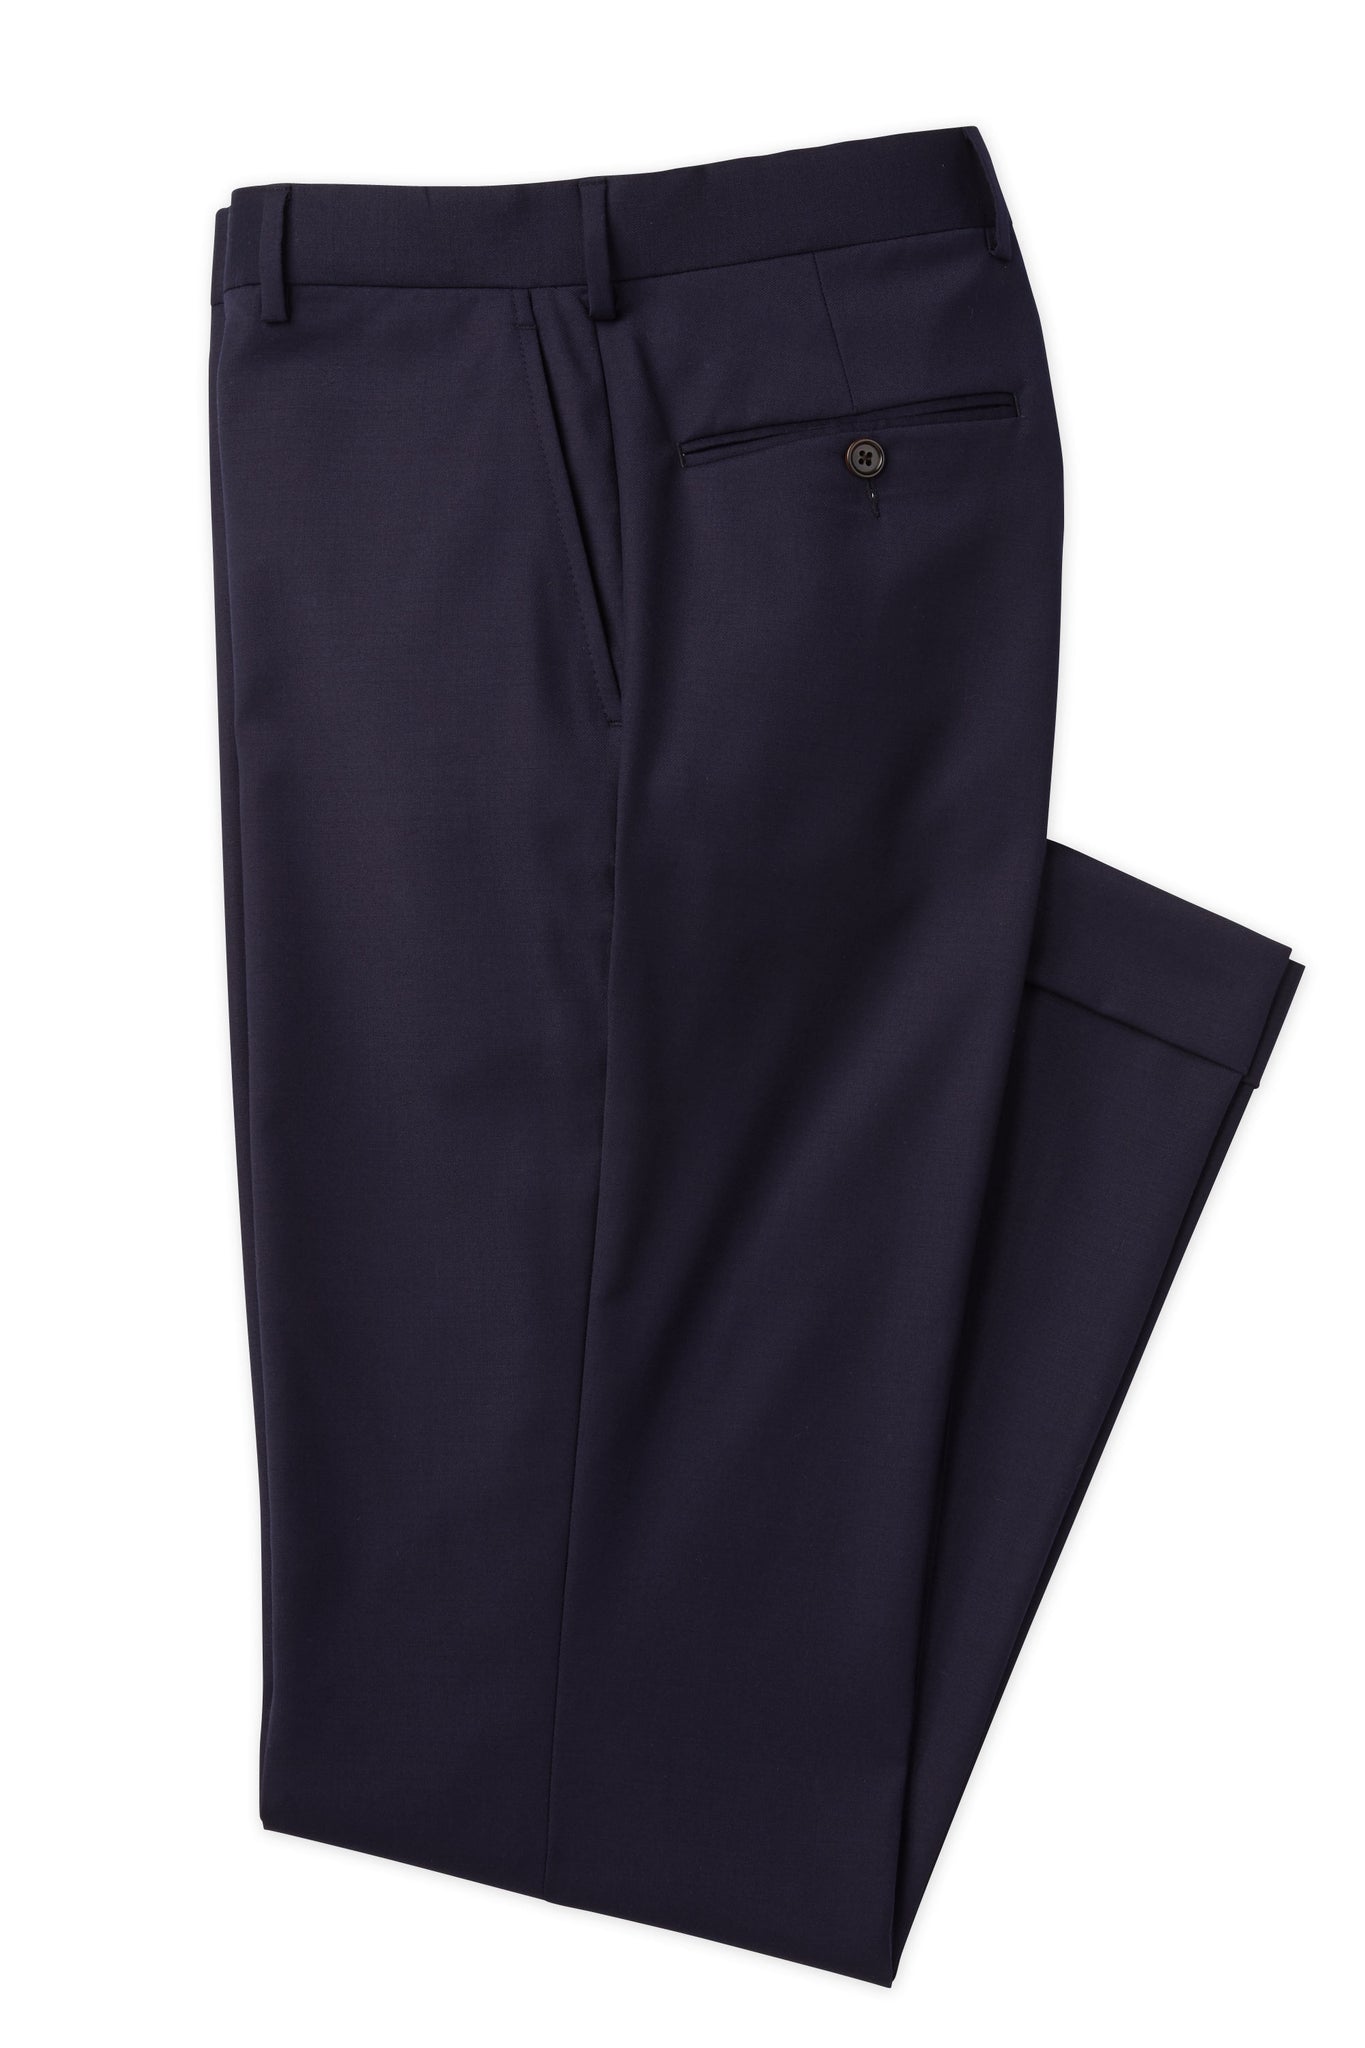 Men's Flat Front Pant Nested Suit Modern Cut - NAVY - 97/3 WOOL/LYCRA SUPER120